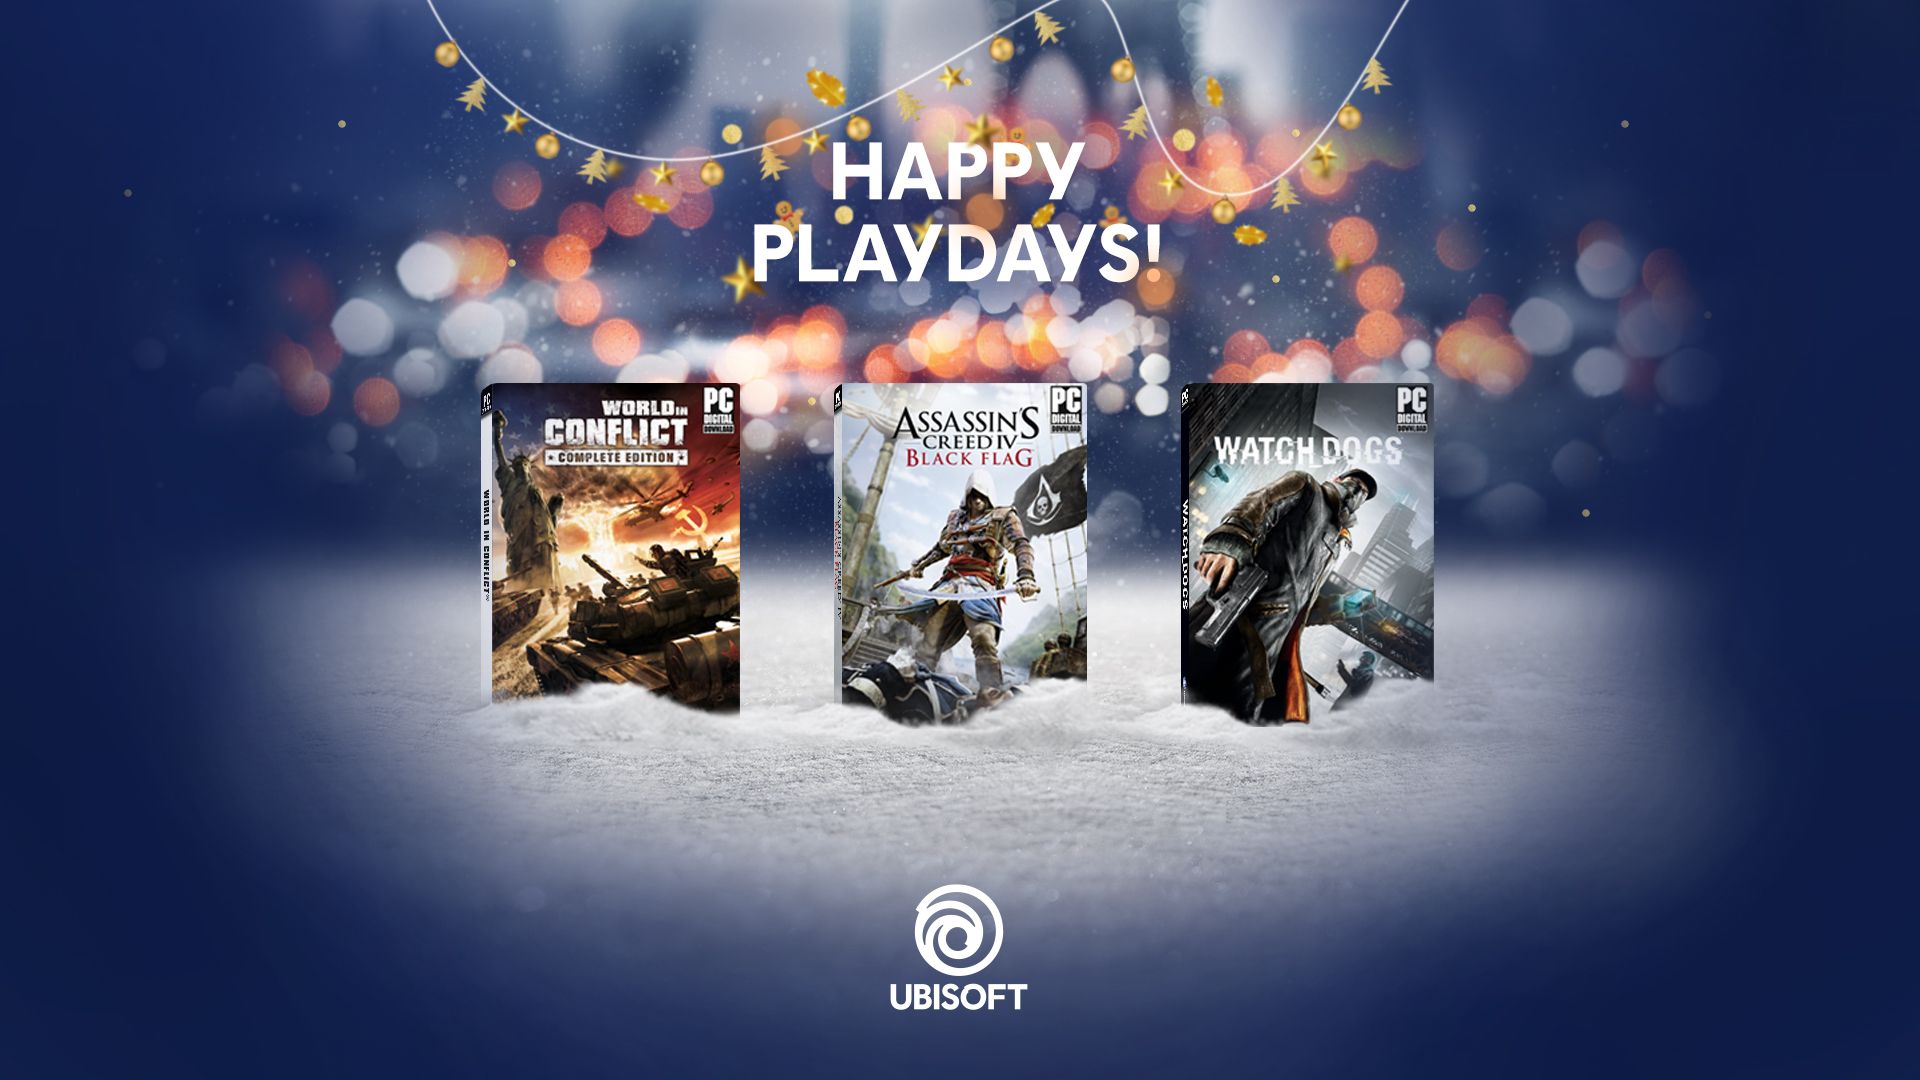 Happy Playdays Ubisoft Free